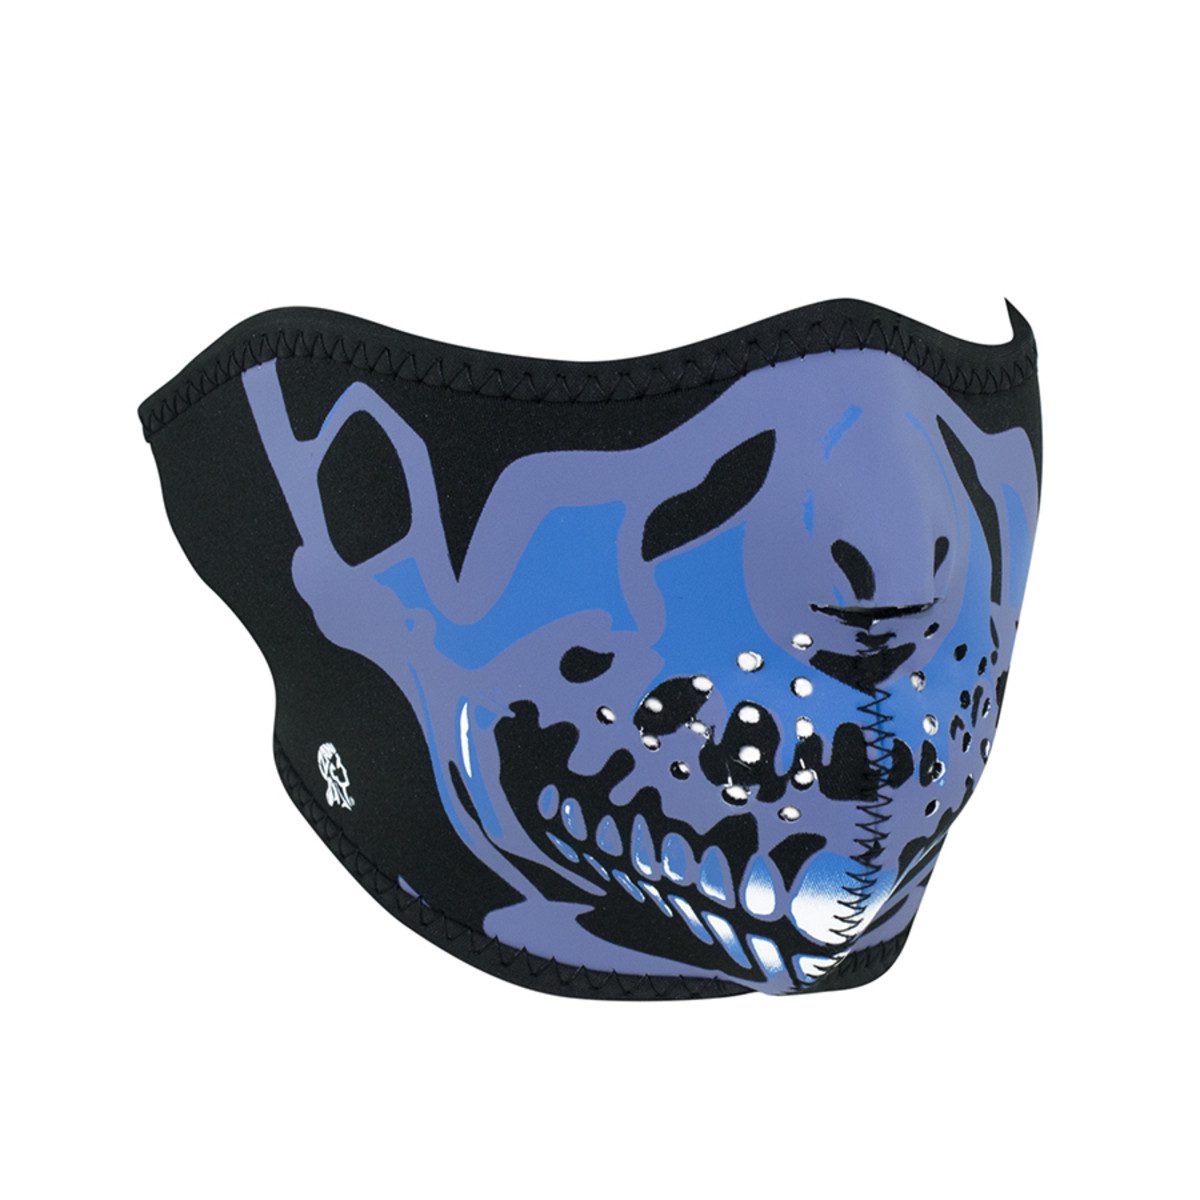 Zan Headgear Neoprene Half-Face Mask - Blue Chrome Skull